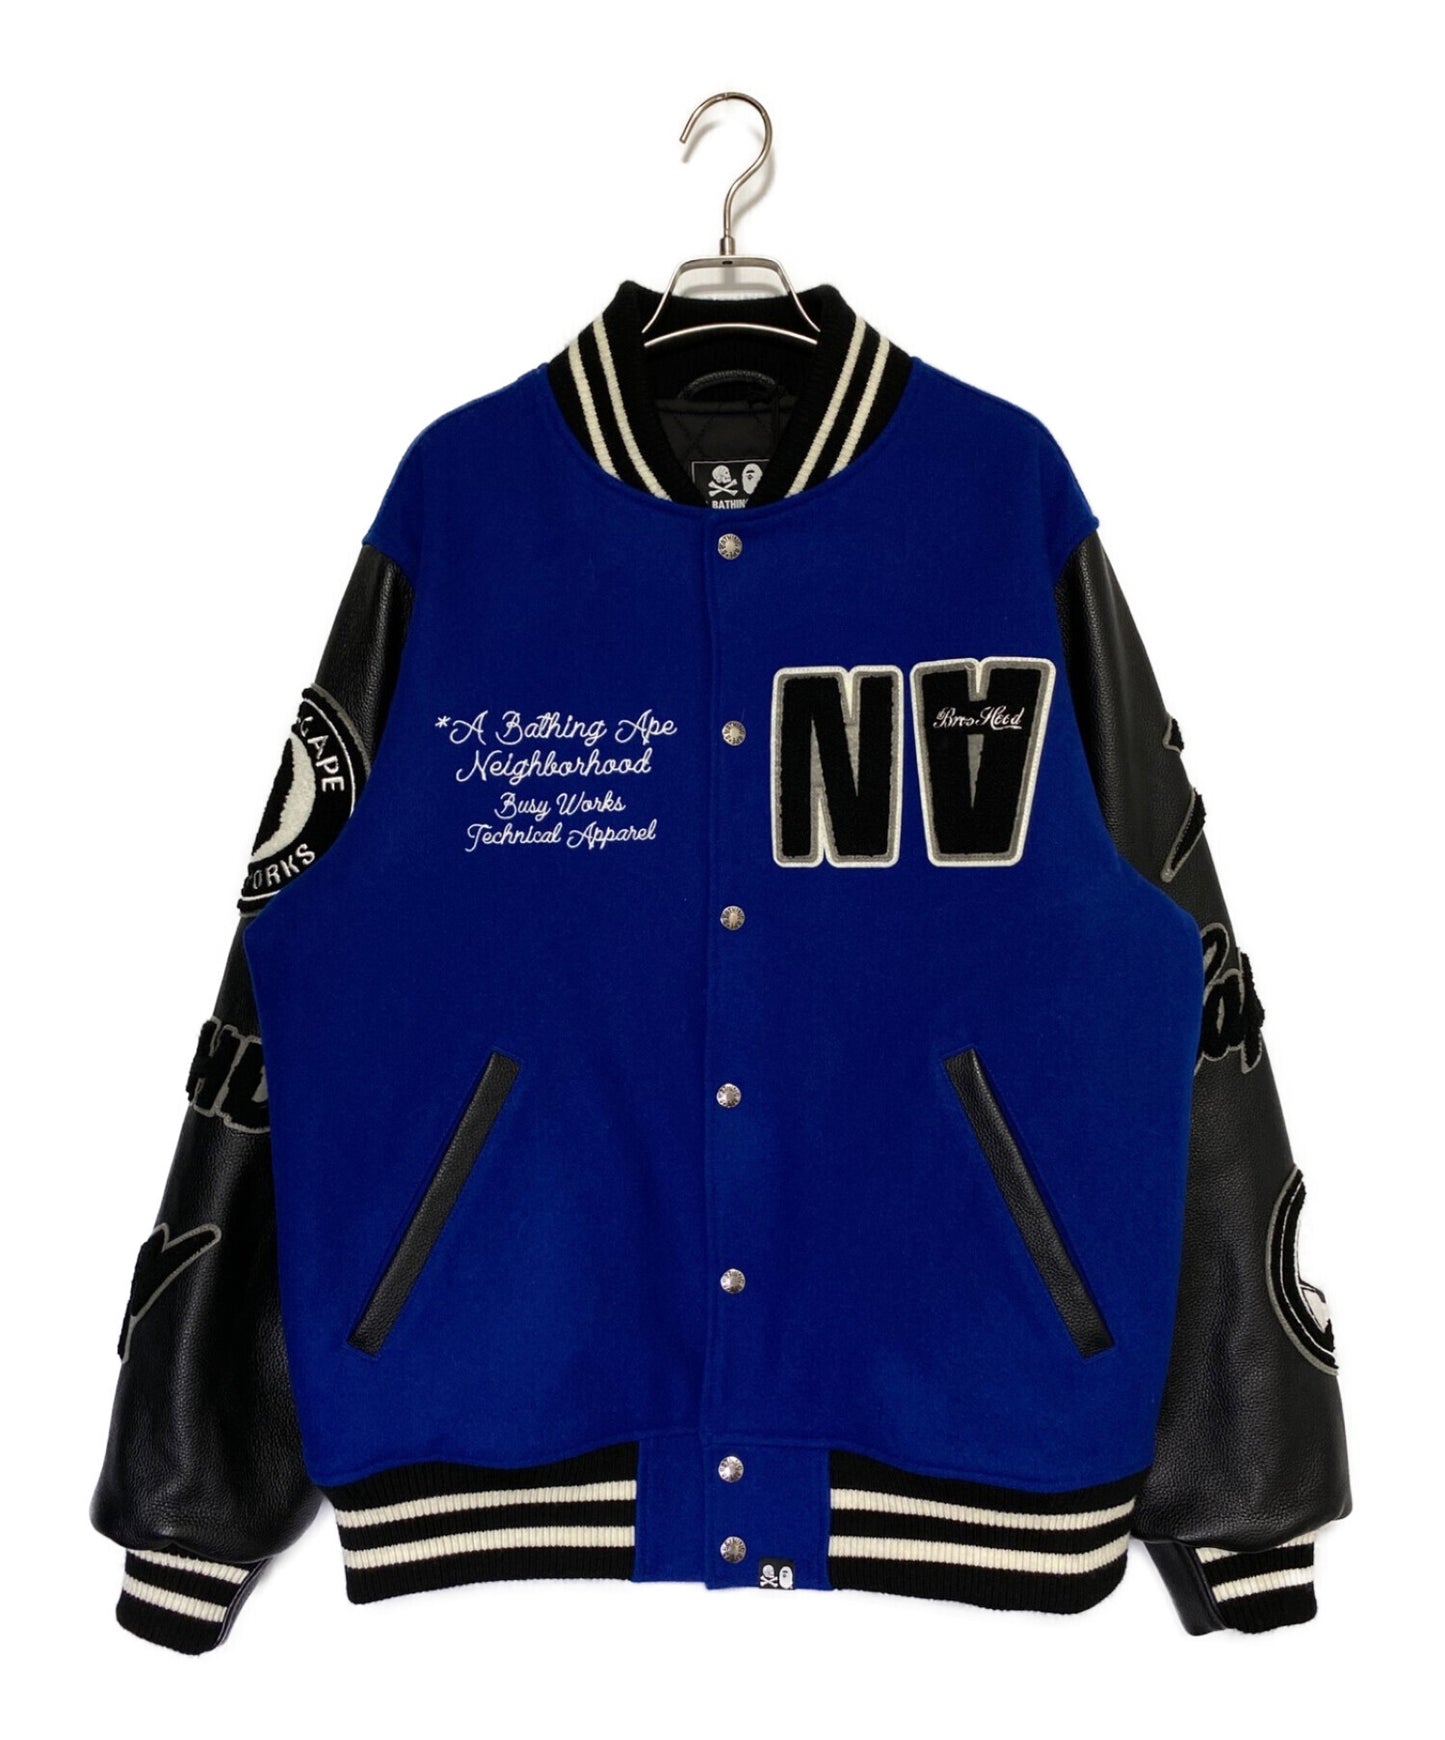 Louis Vuitton & Fragment Varsity Jacket - Jacket Makers